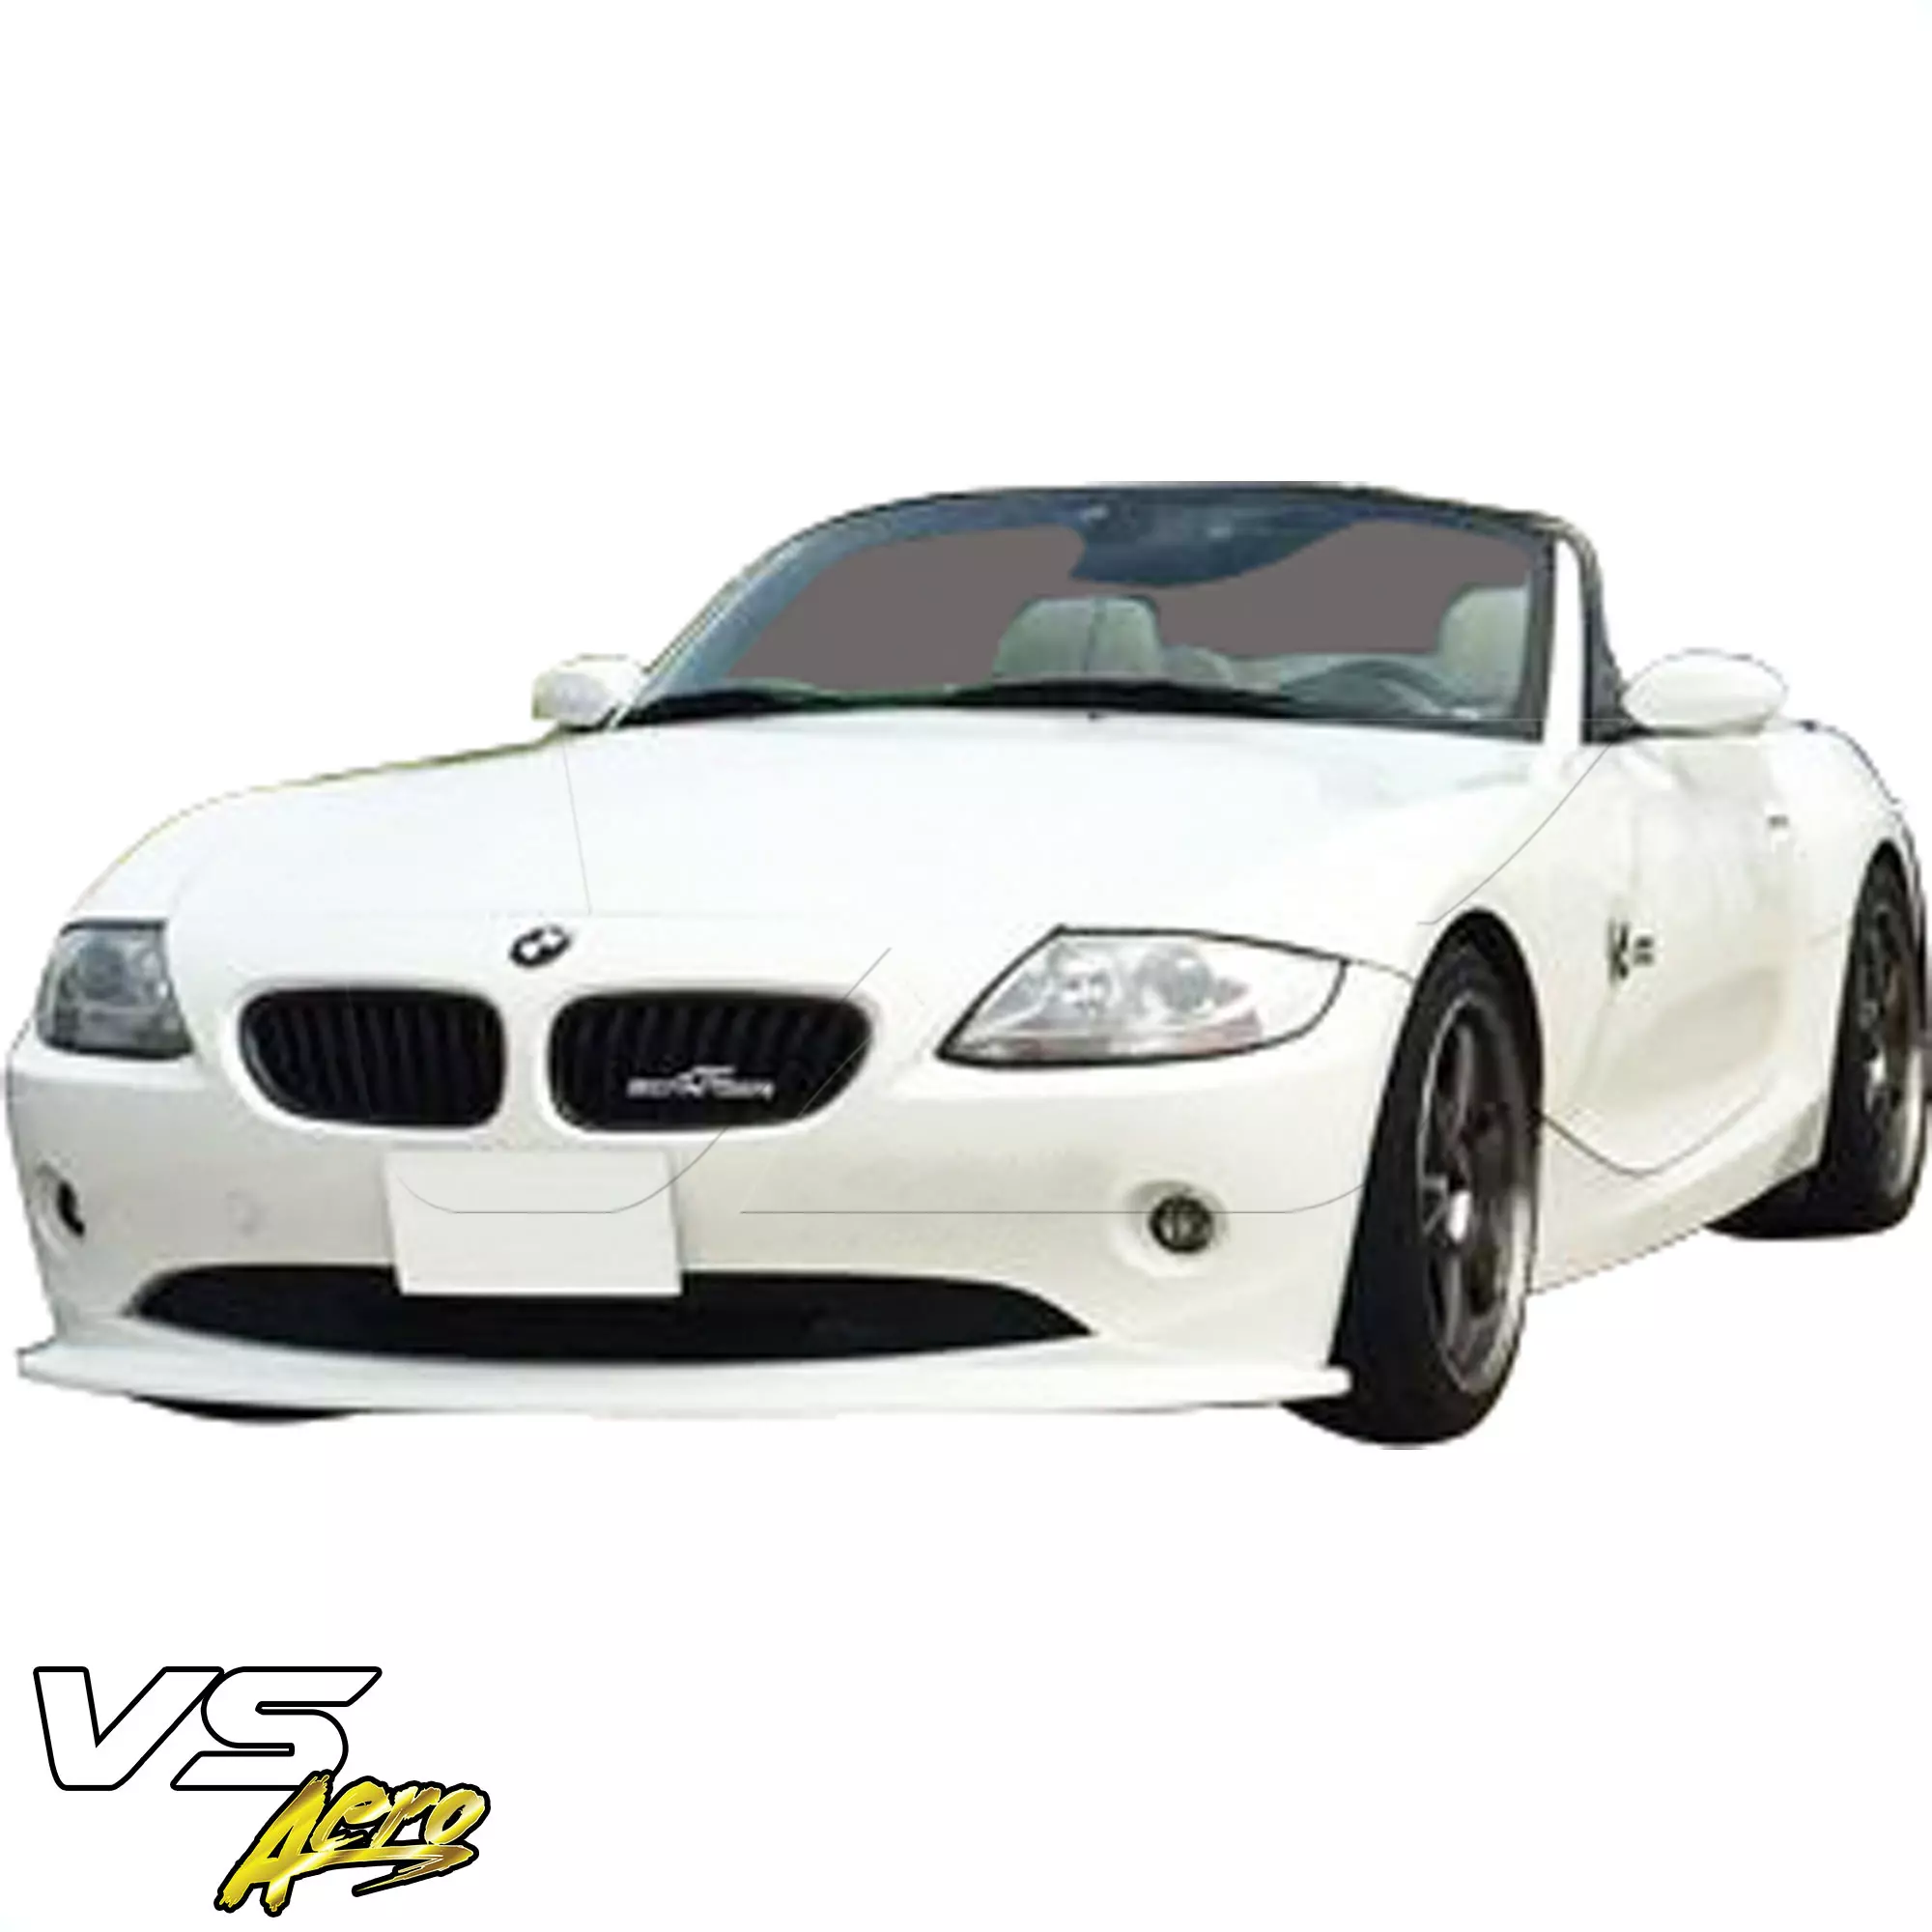 VSaero FRP HAMA Body Kit 4pc > BMW Z4 E85 2003-2005 - Image 2